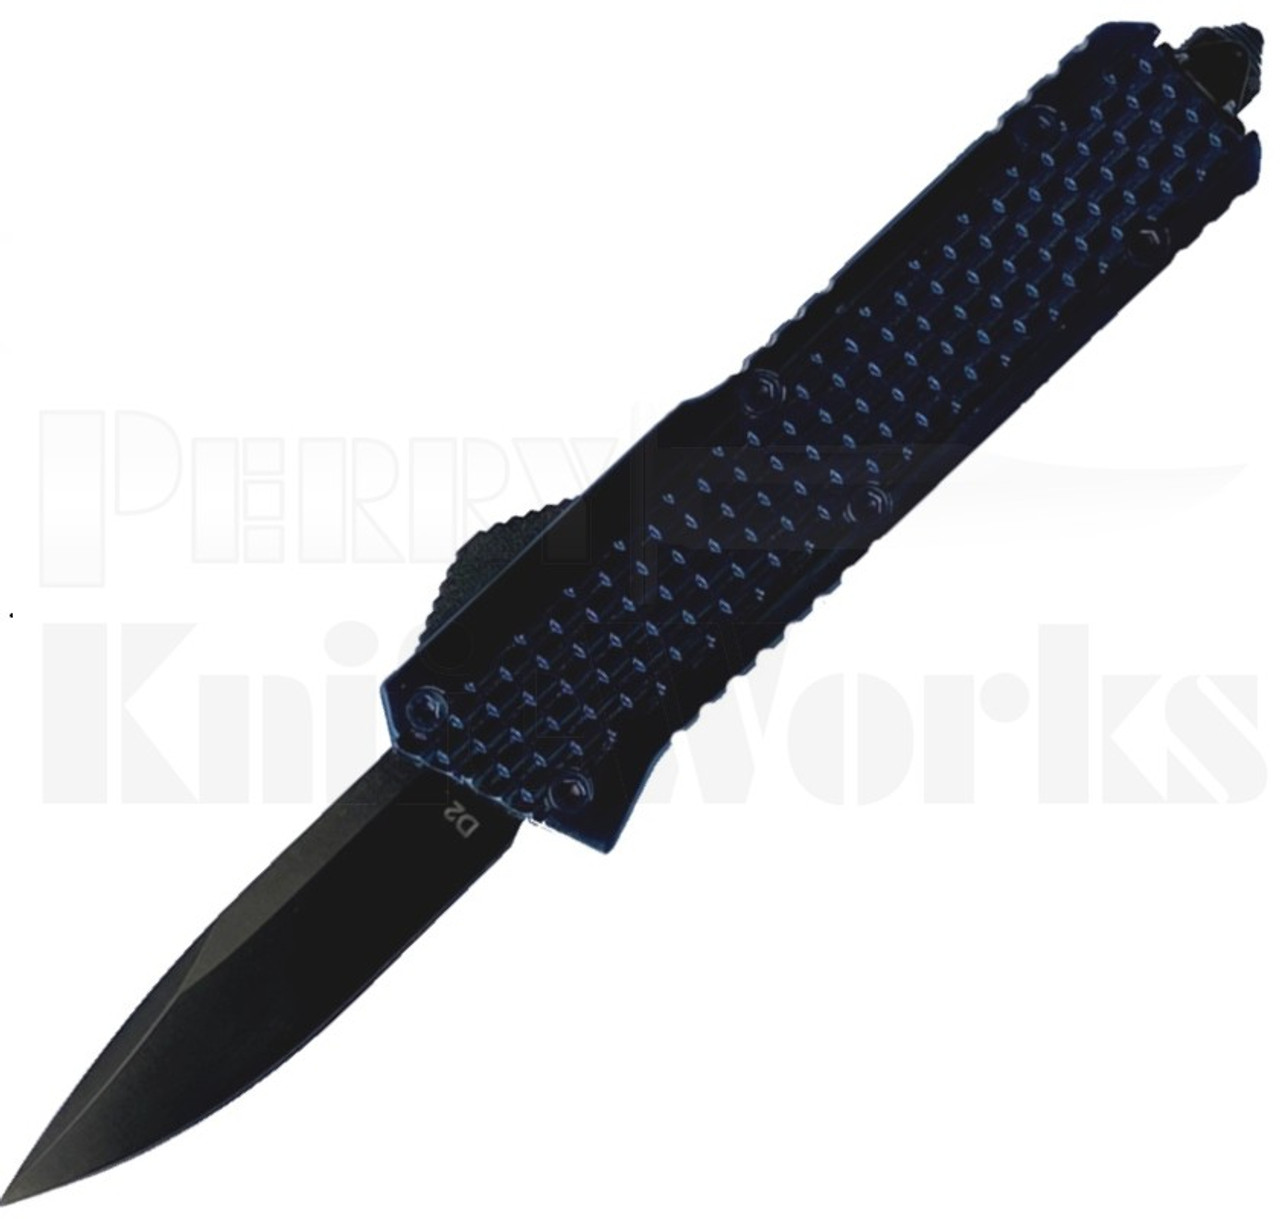 Delta Force Elite Model-B Automatic Knife Blue l 1.9" Blade l For Sale